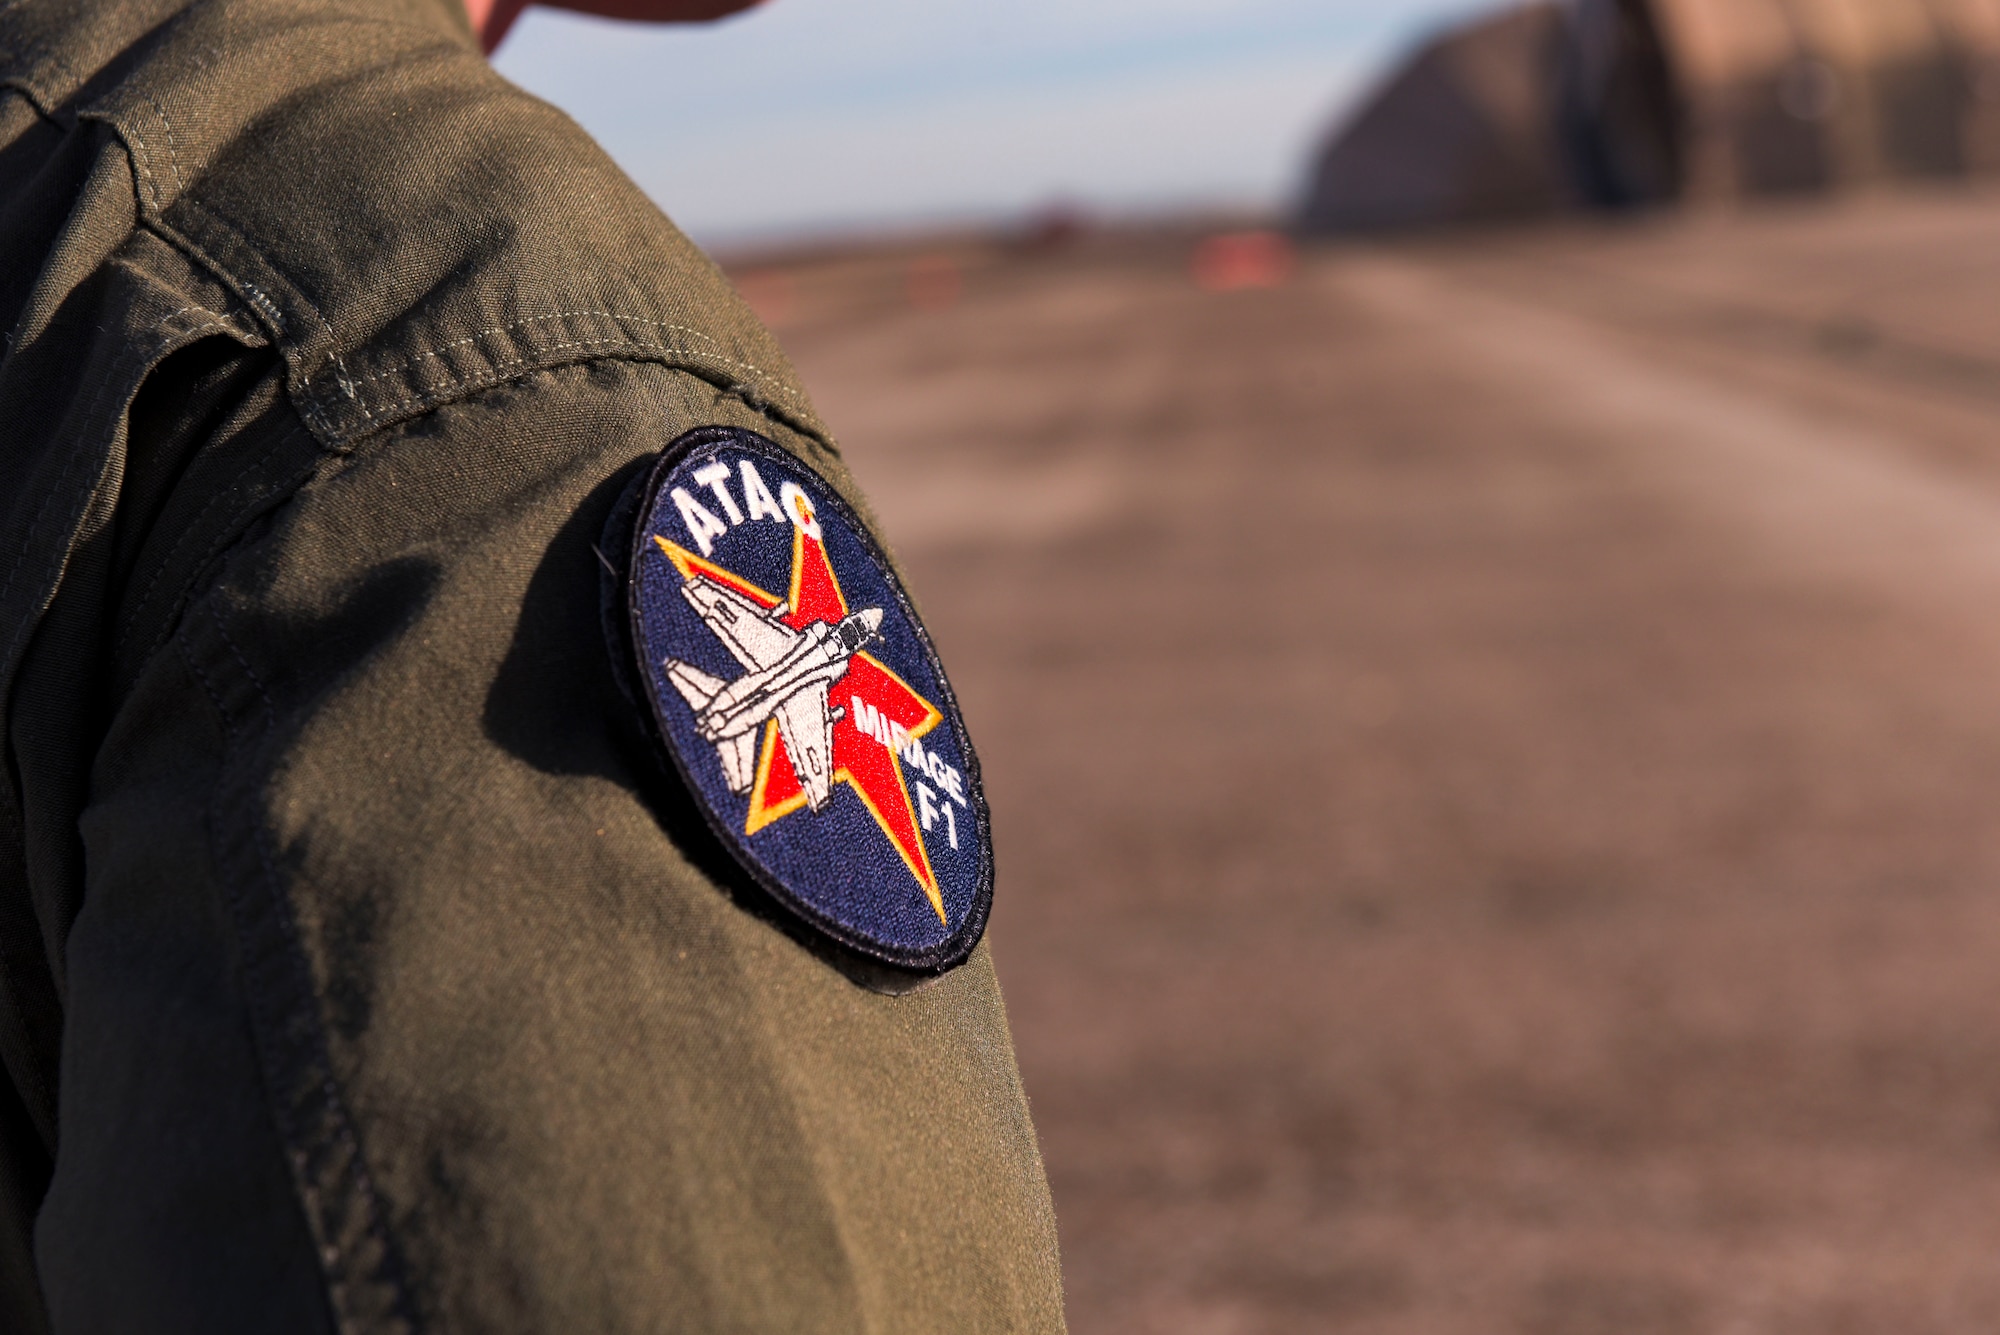 a patch on a flight suit